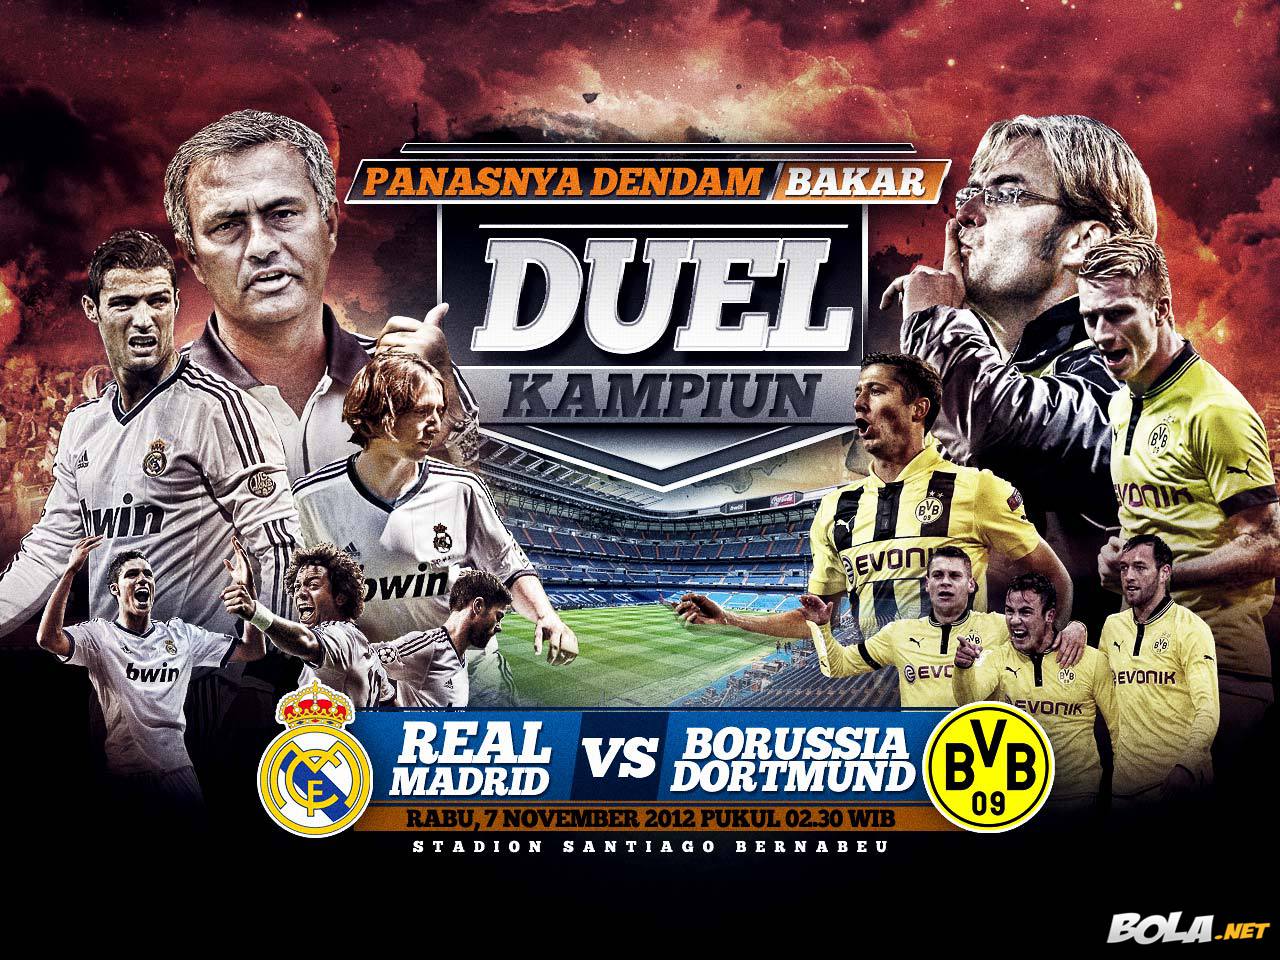 Download Wallpaper Madrid Vs Dortmund Bolanet